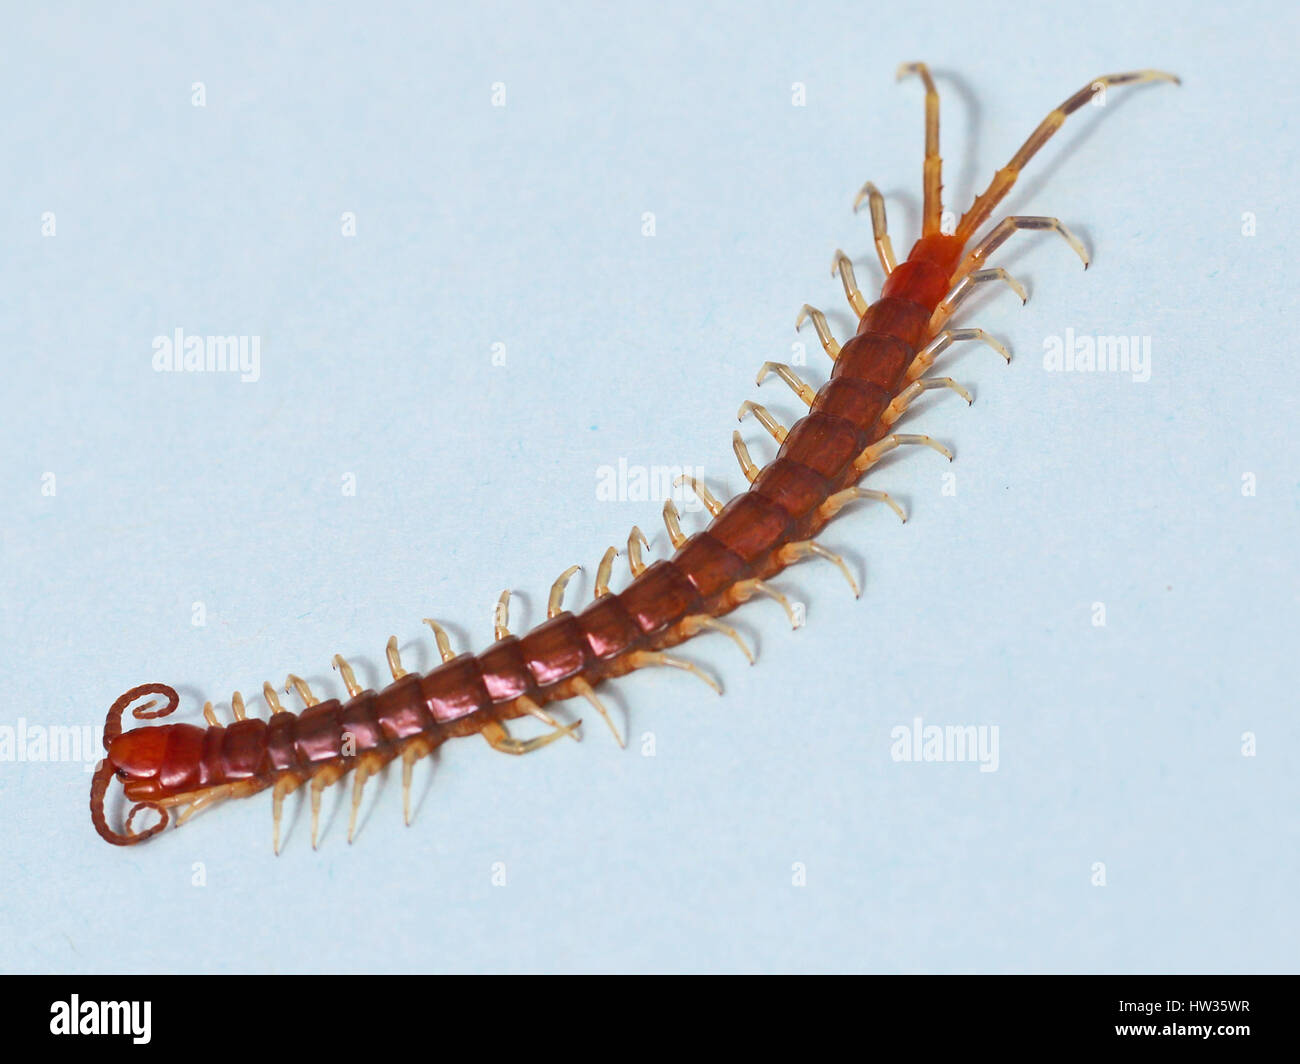 Horrible centipede on white surface Stock Photo